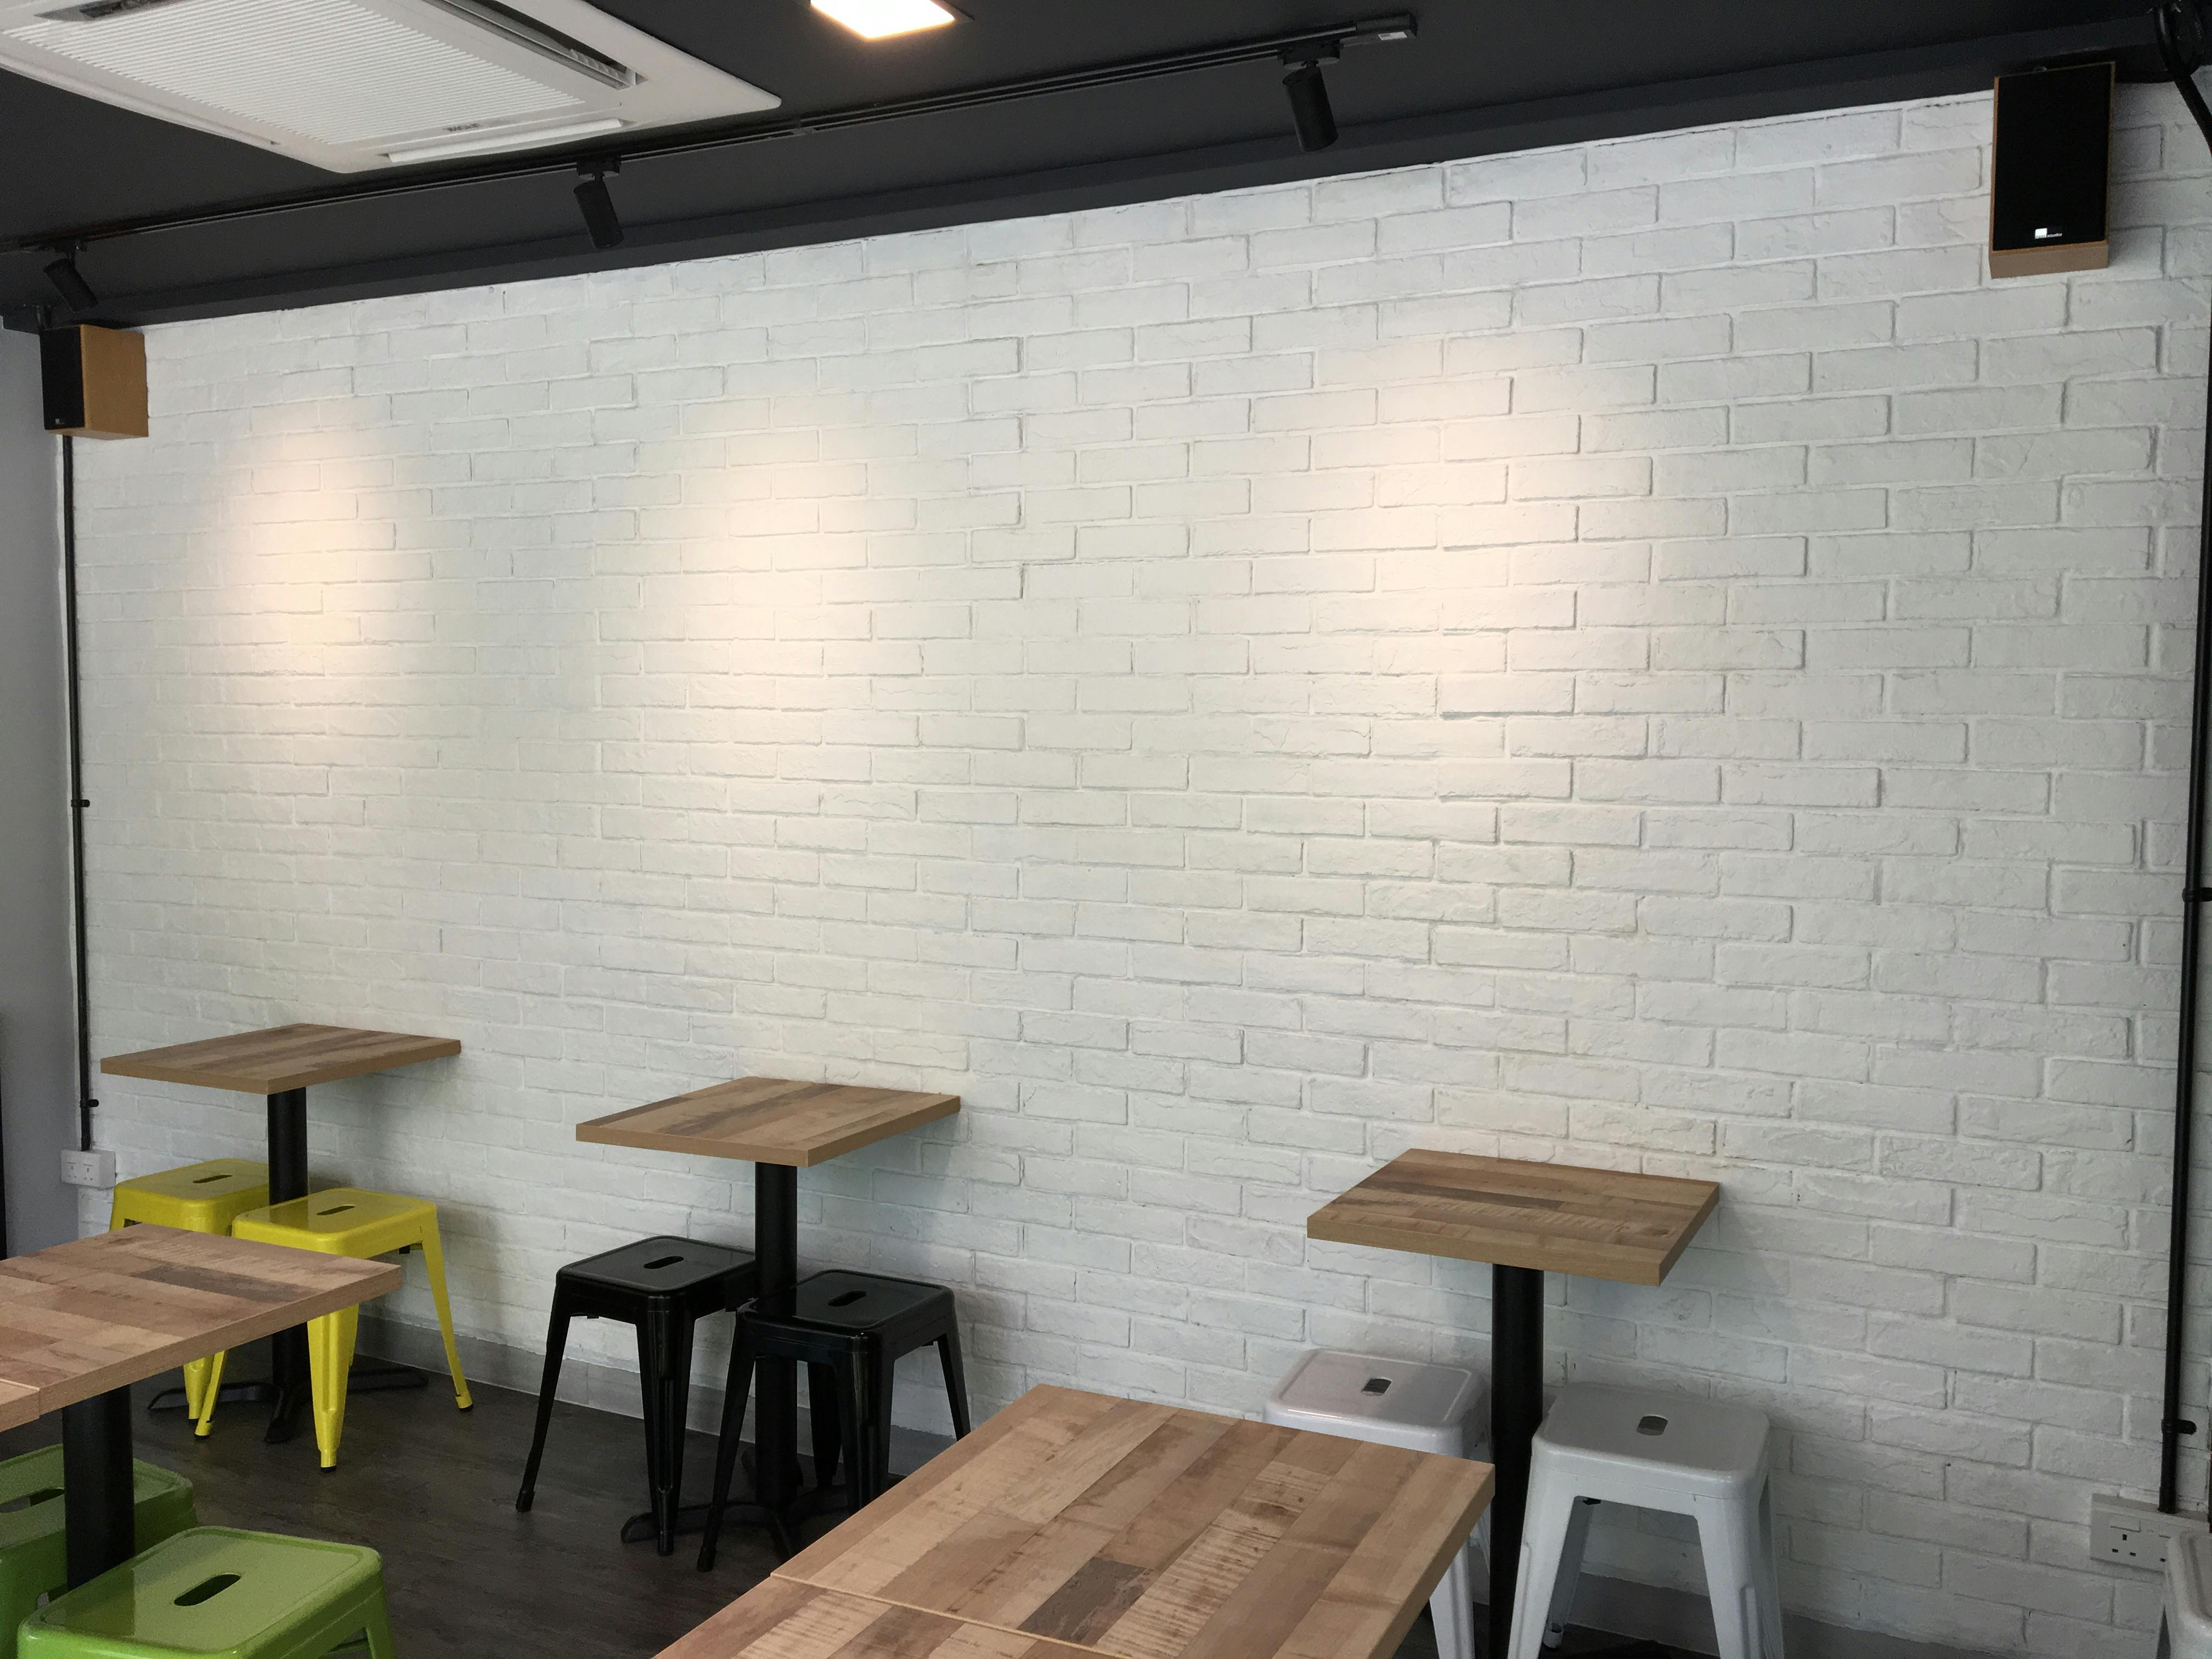 Free stock photo of brick texture, brick wall, café